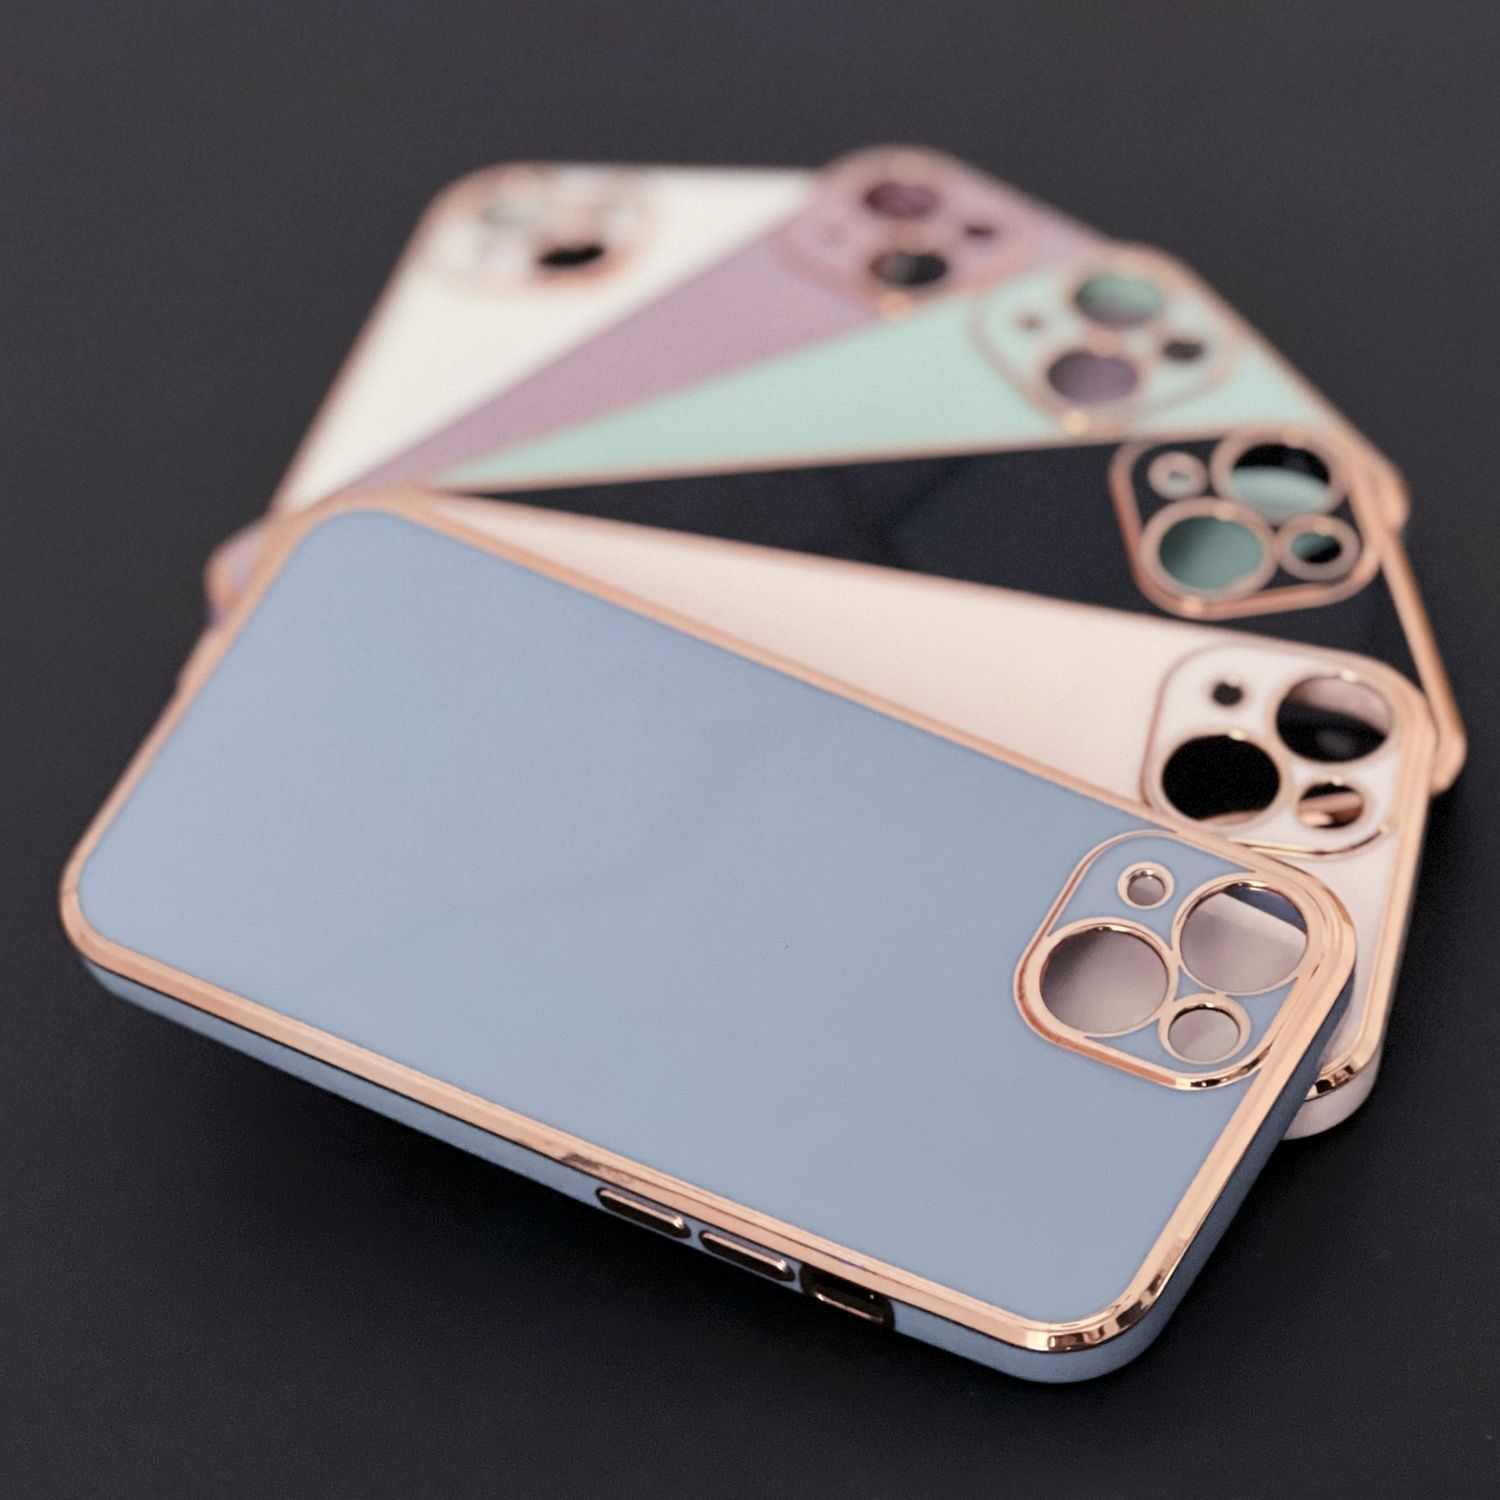 COFI Lighting Apple, Color 13 Case, Mintgrün-Gold iPhone Backcover, Pro